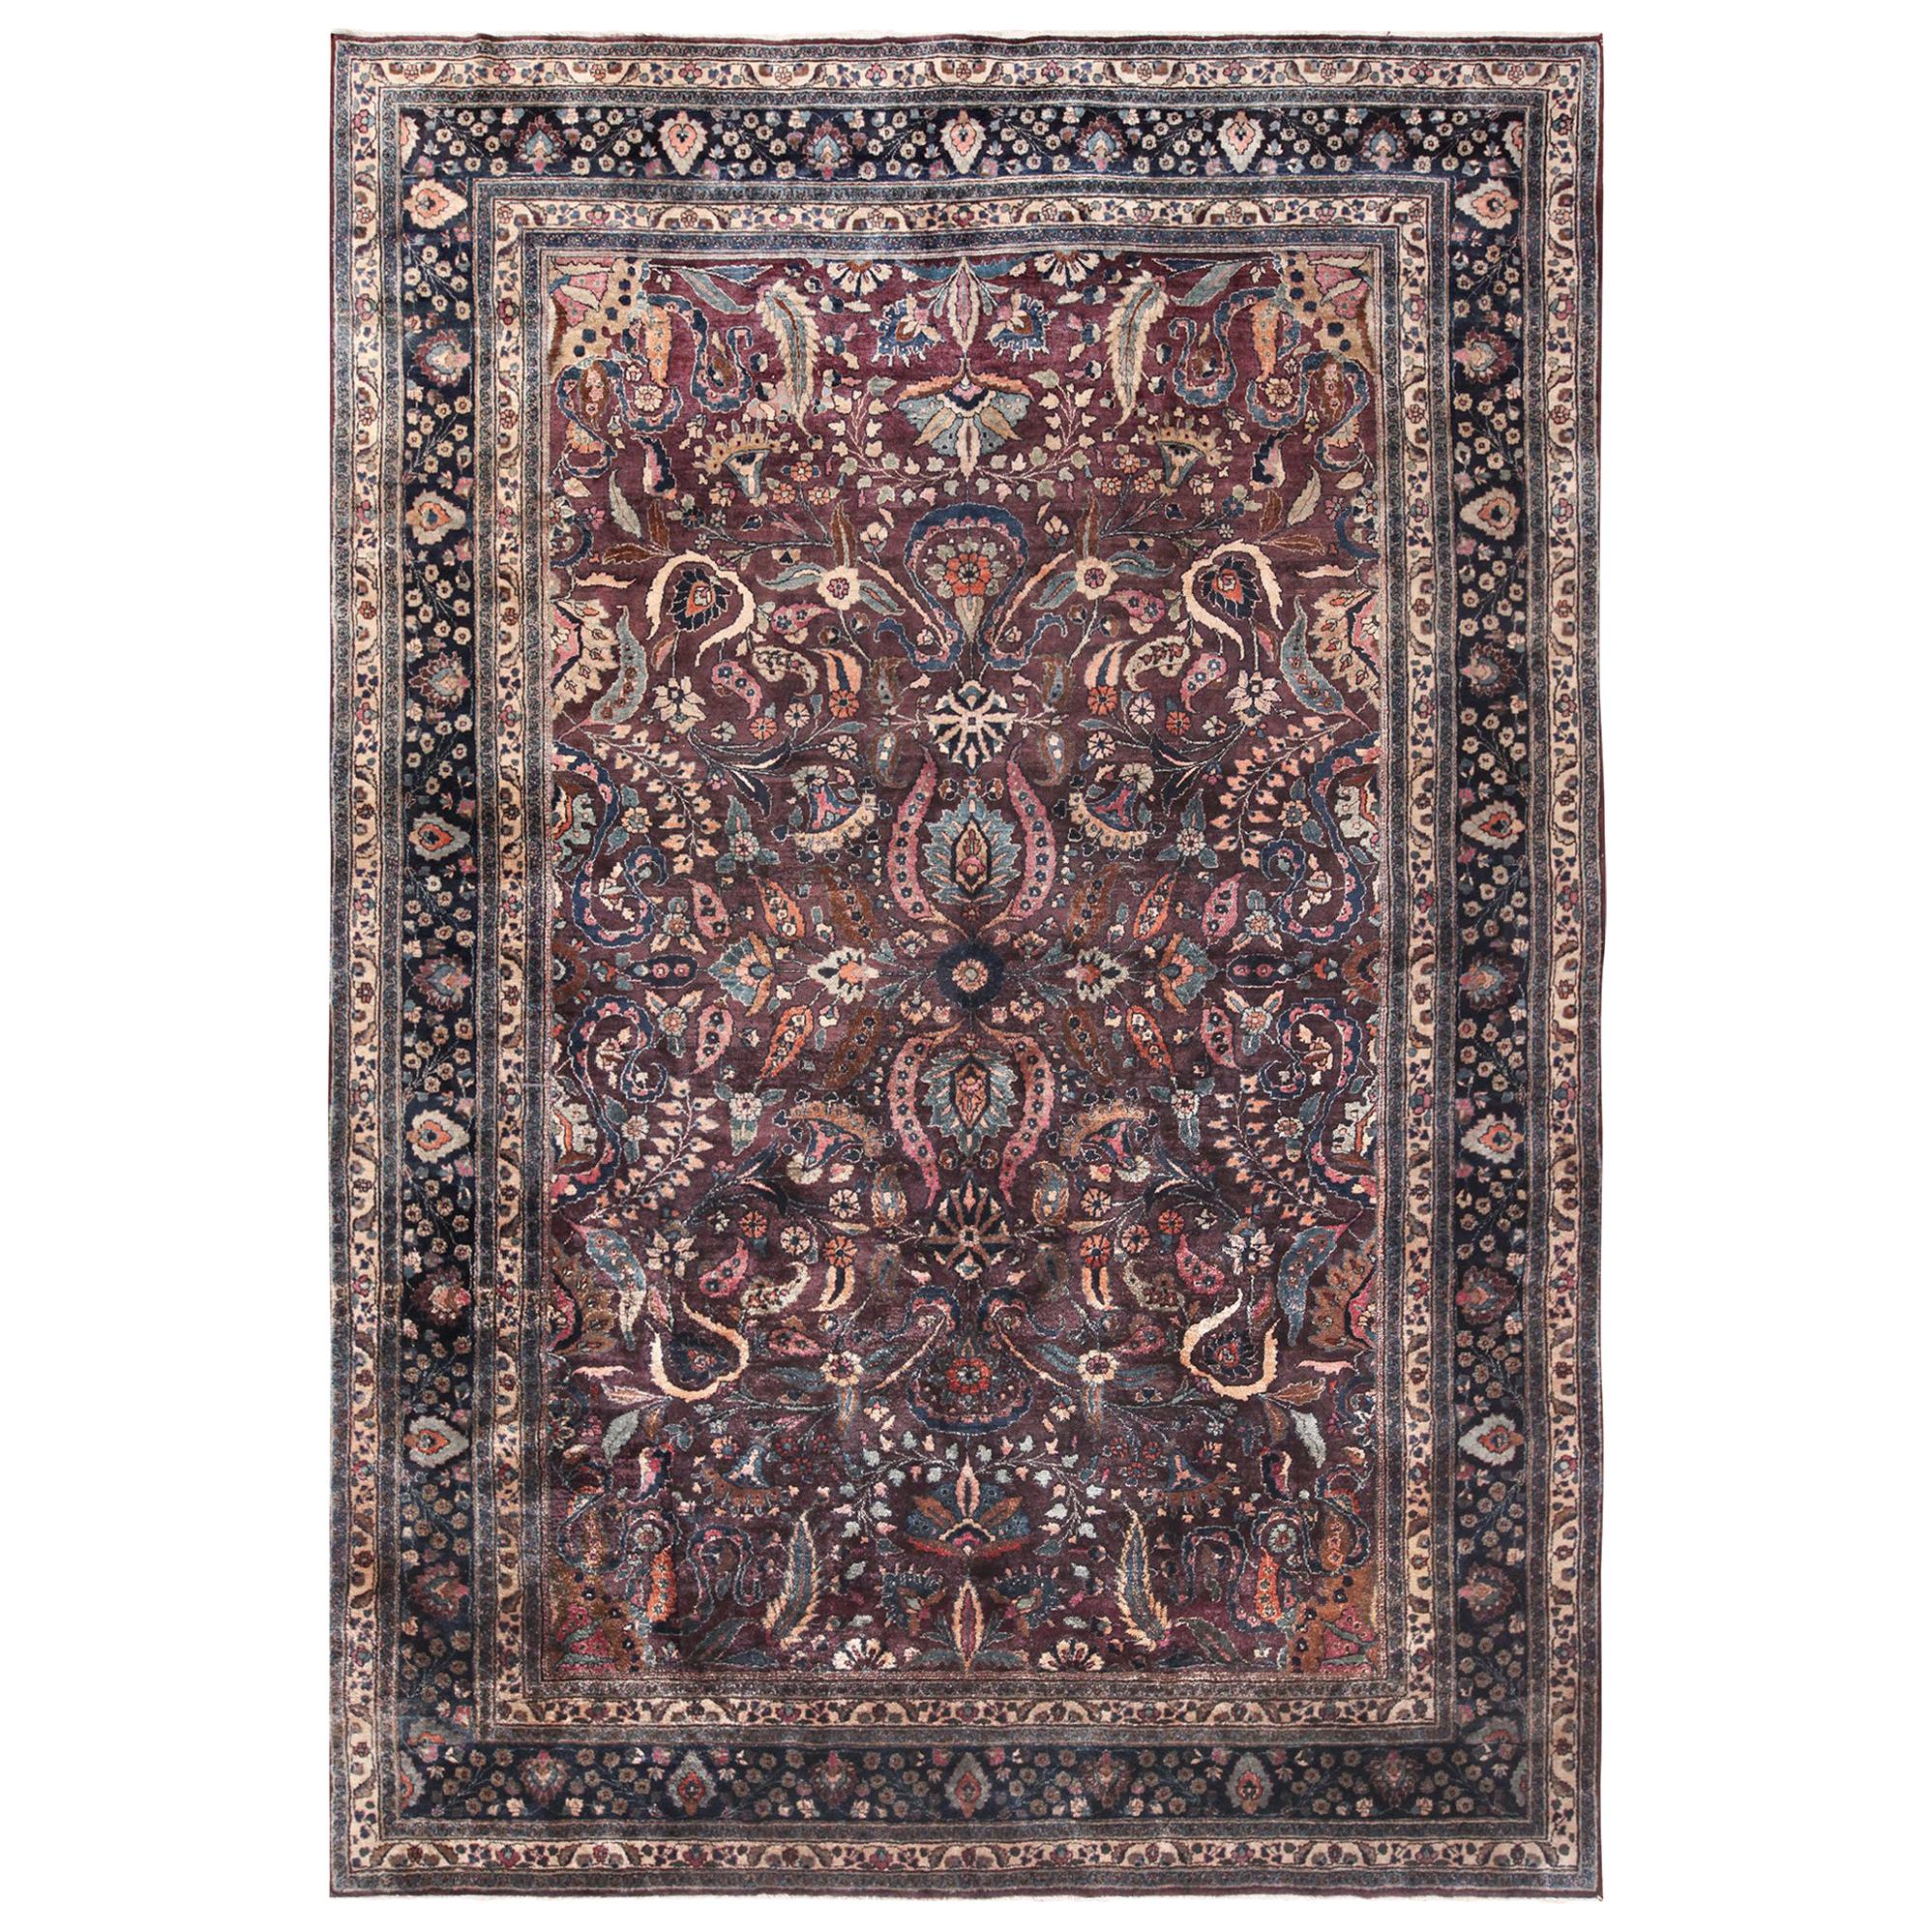 Nazmiyal Collection Antique Persian Khorassan Rug. Size: 10' x 14' 7" 